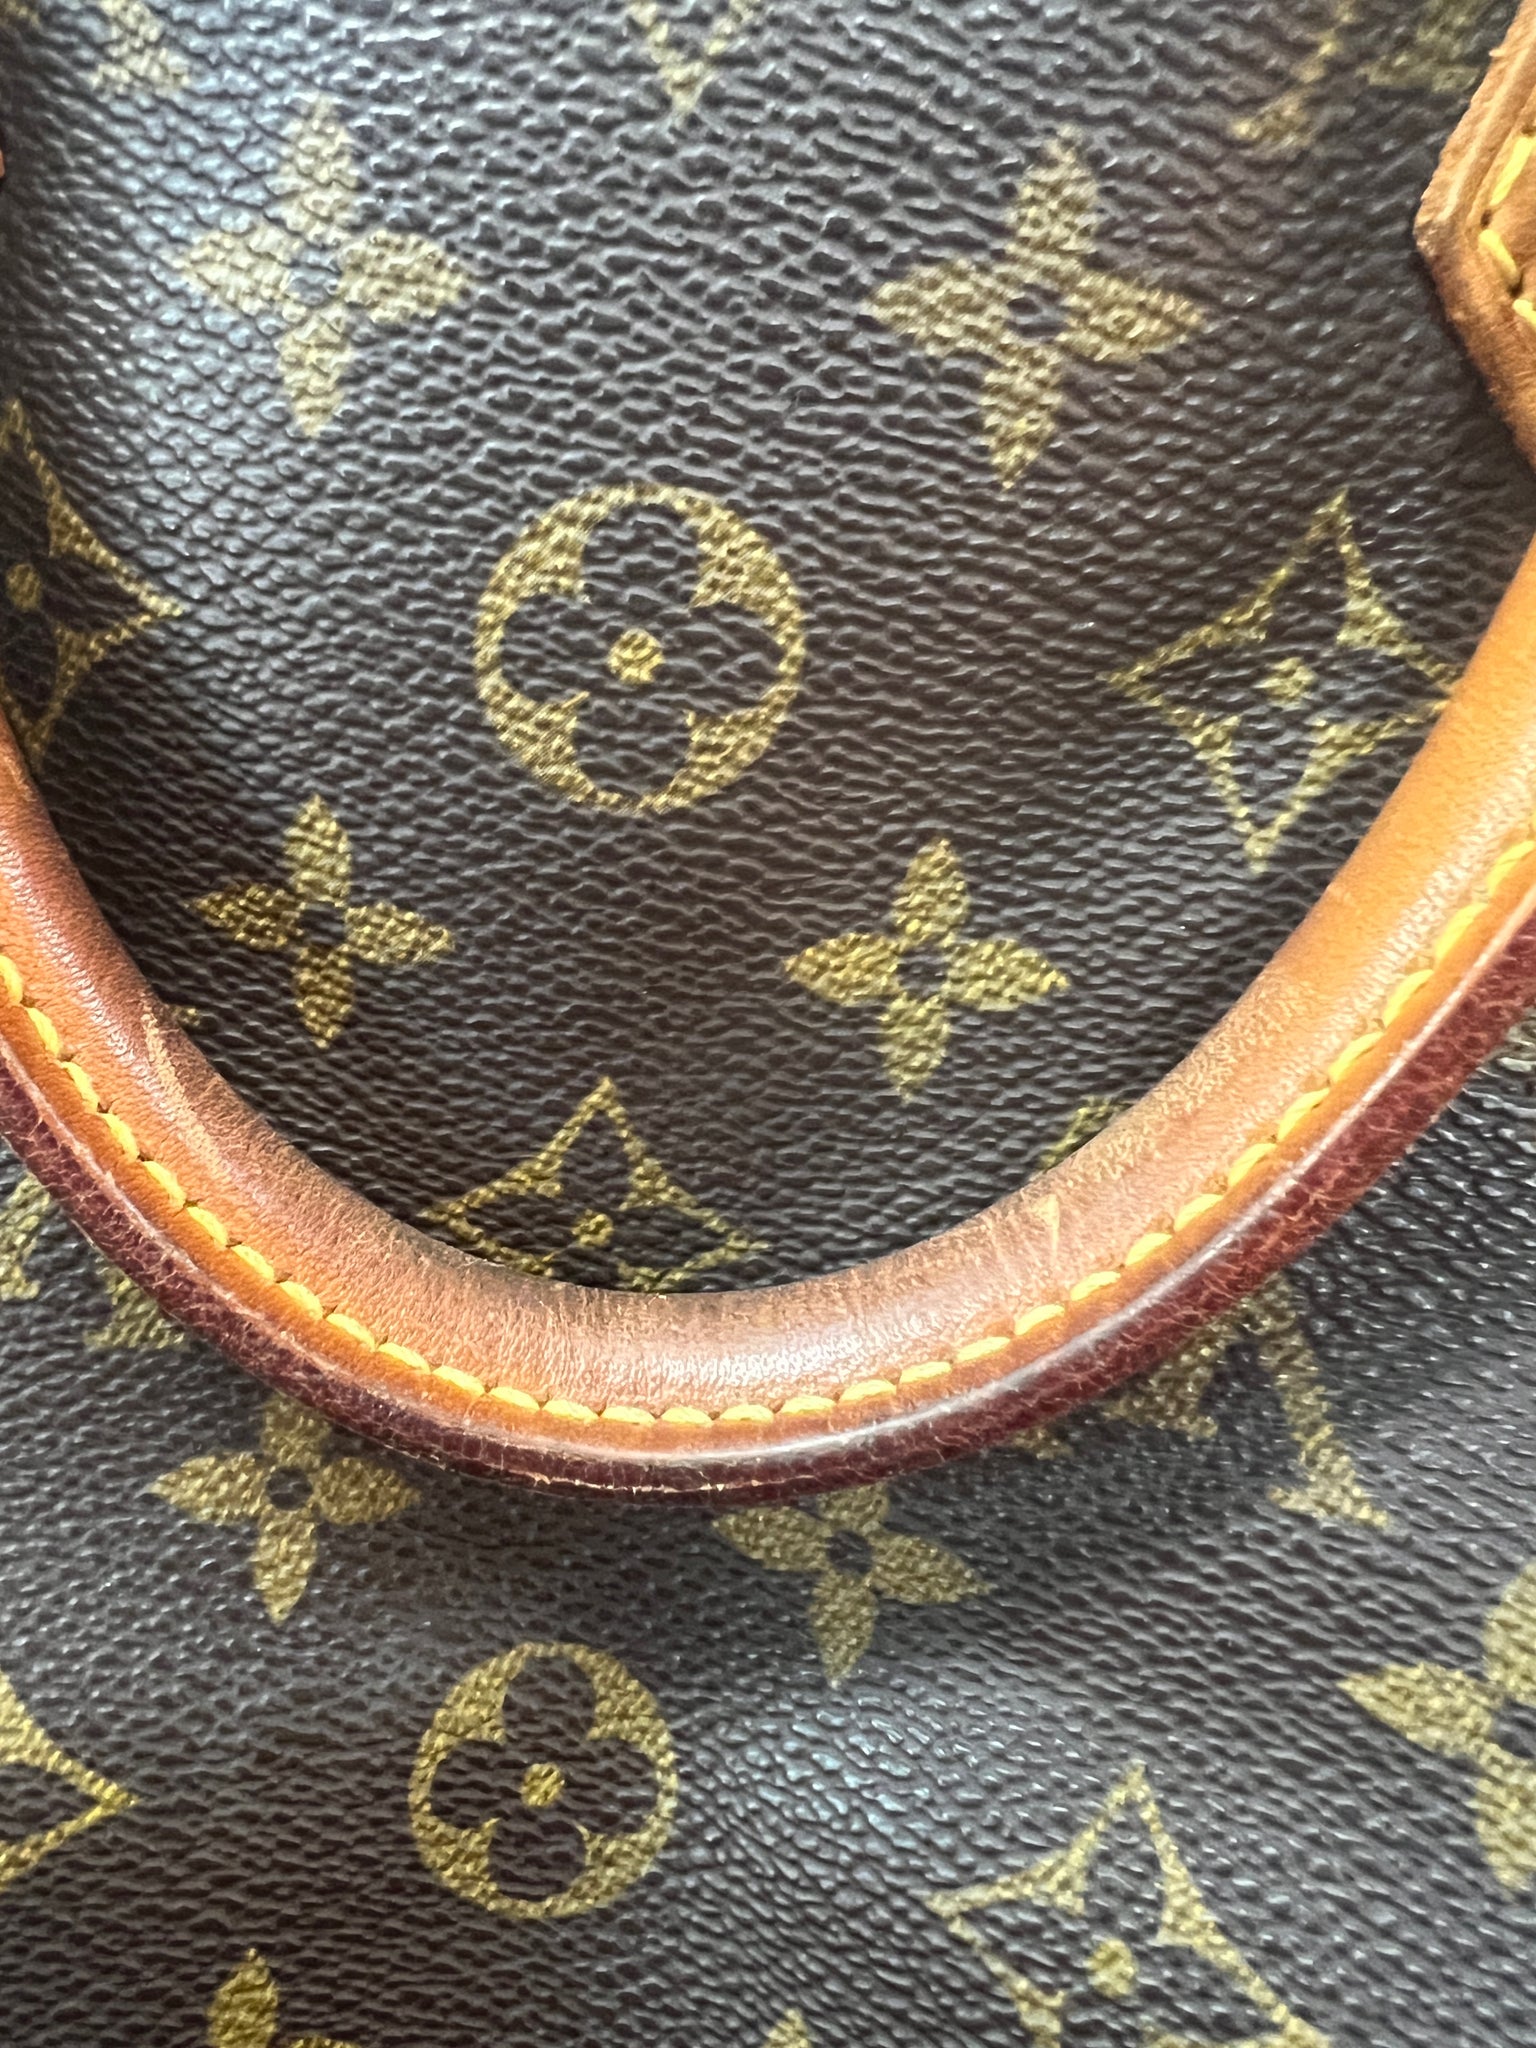 Authentic Louis Vuitton Monogram Speedy 35 Hand Bag Purse MB 0012